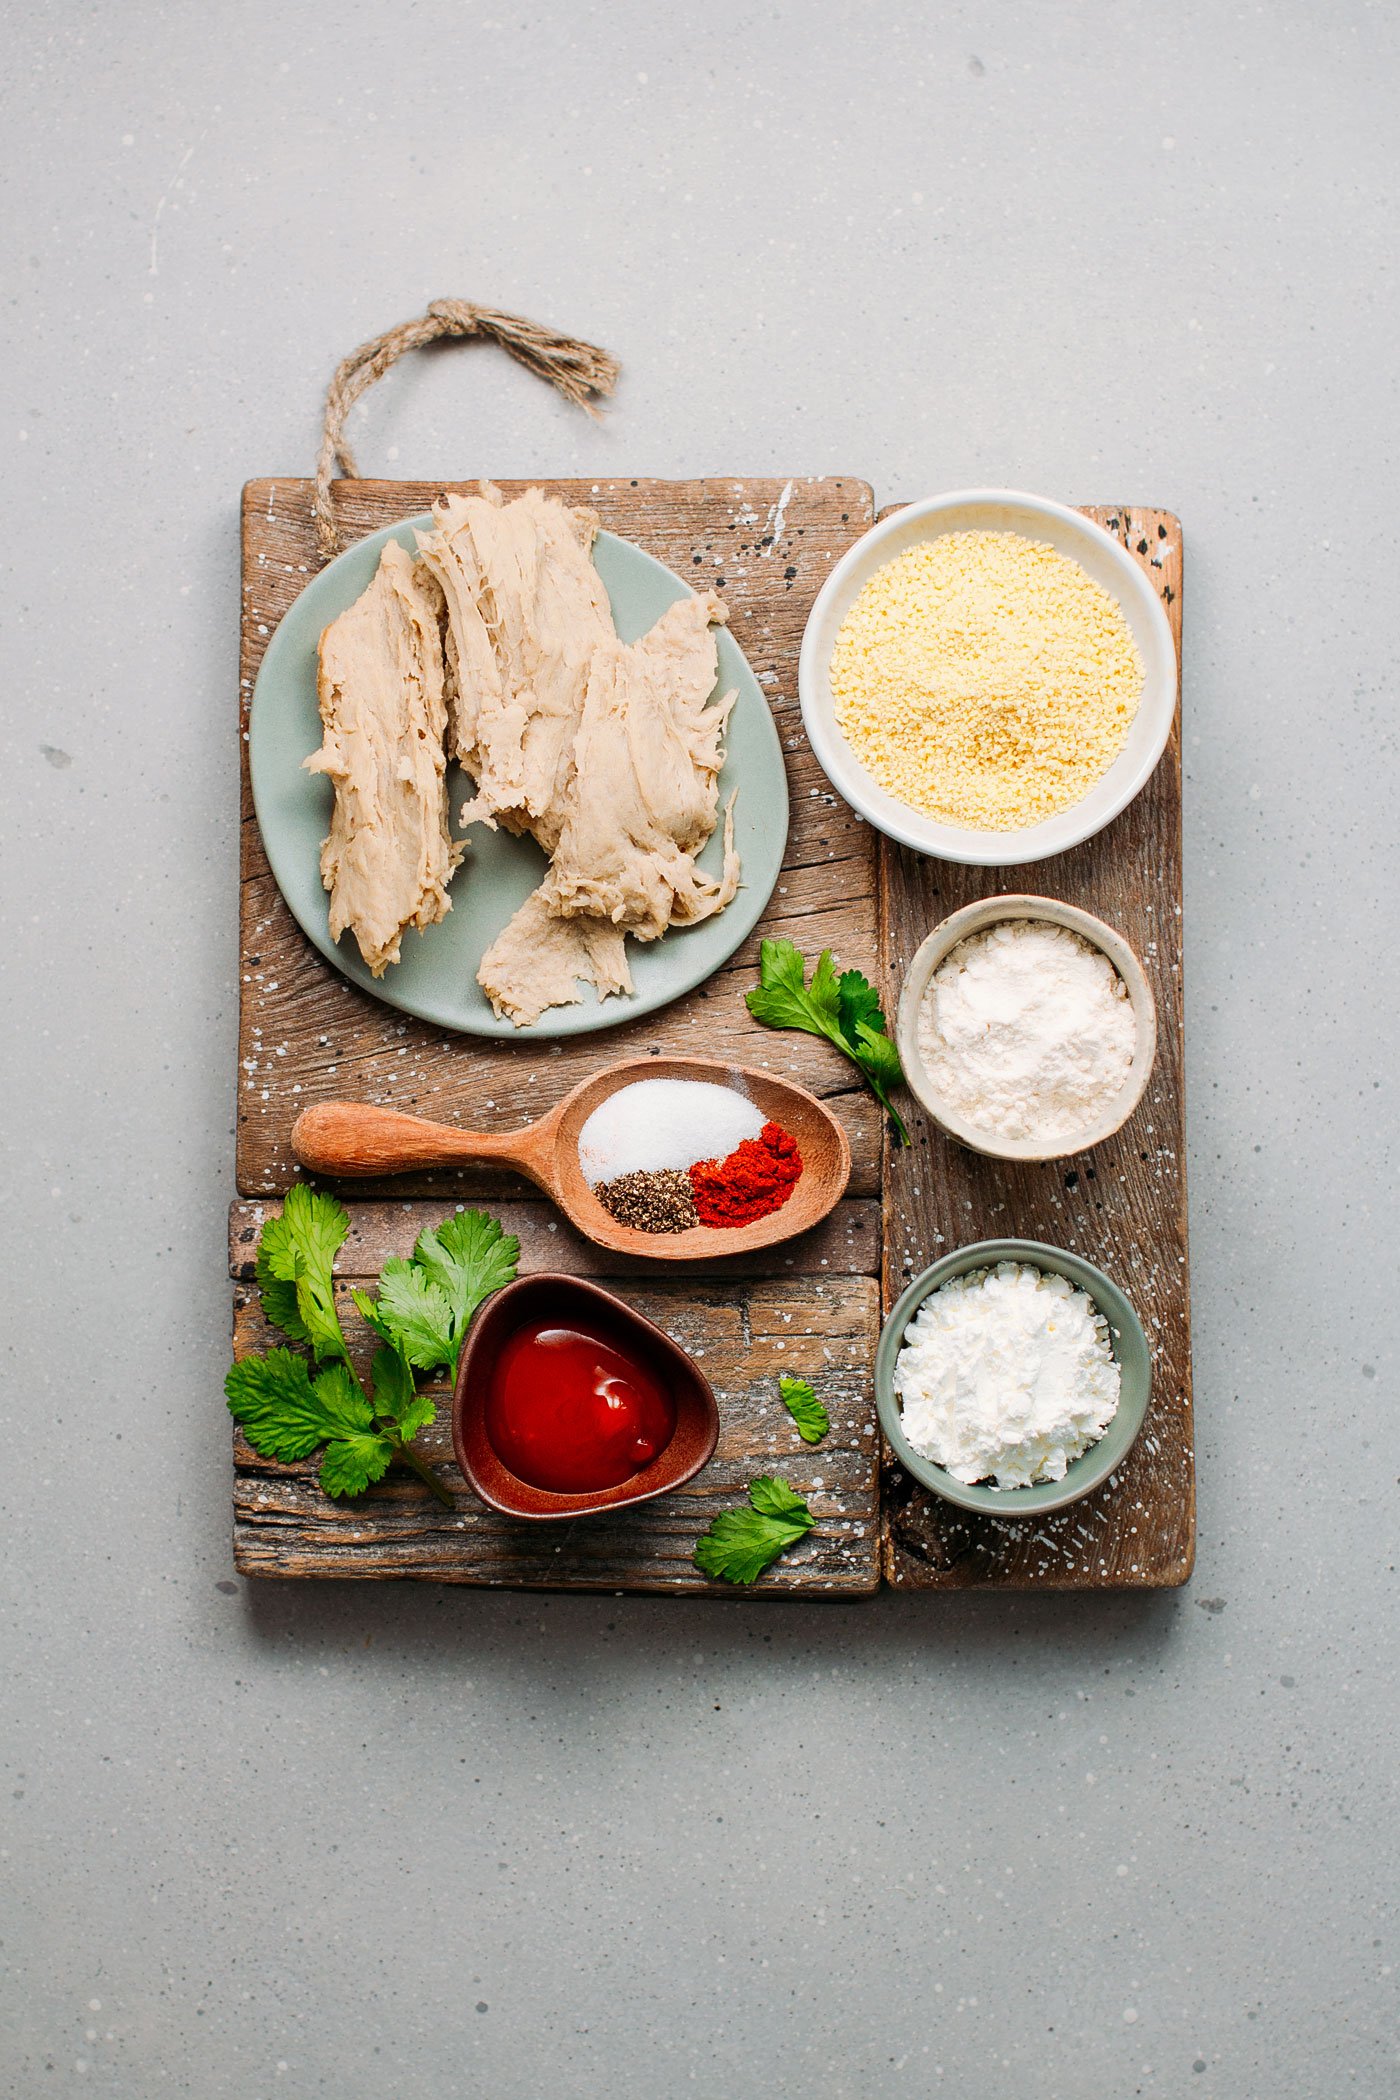 Ingredients to make vegan chicken nuggets, breadcrumbs, spices, cornstarch.